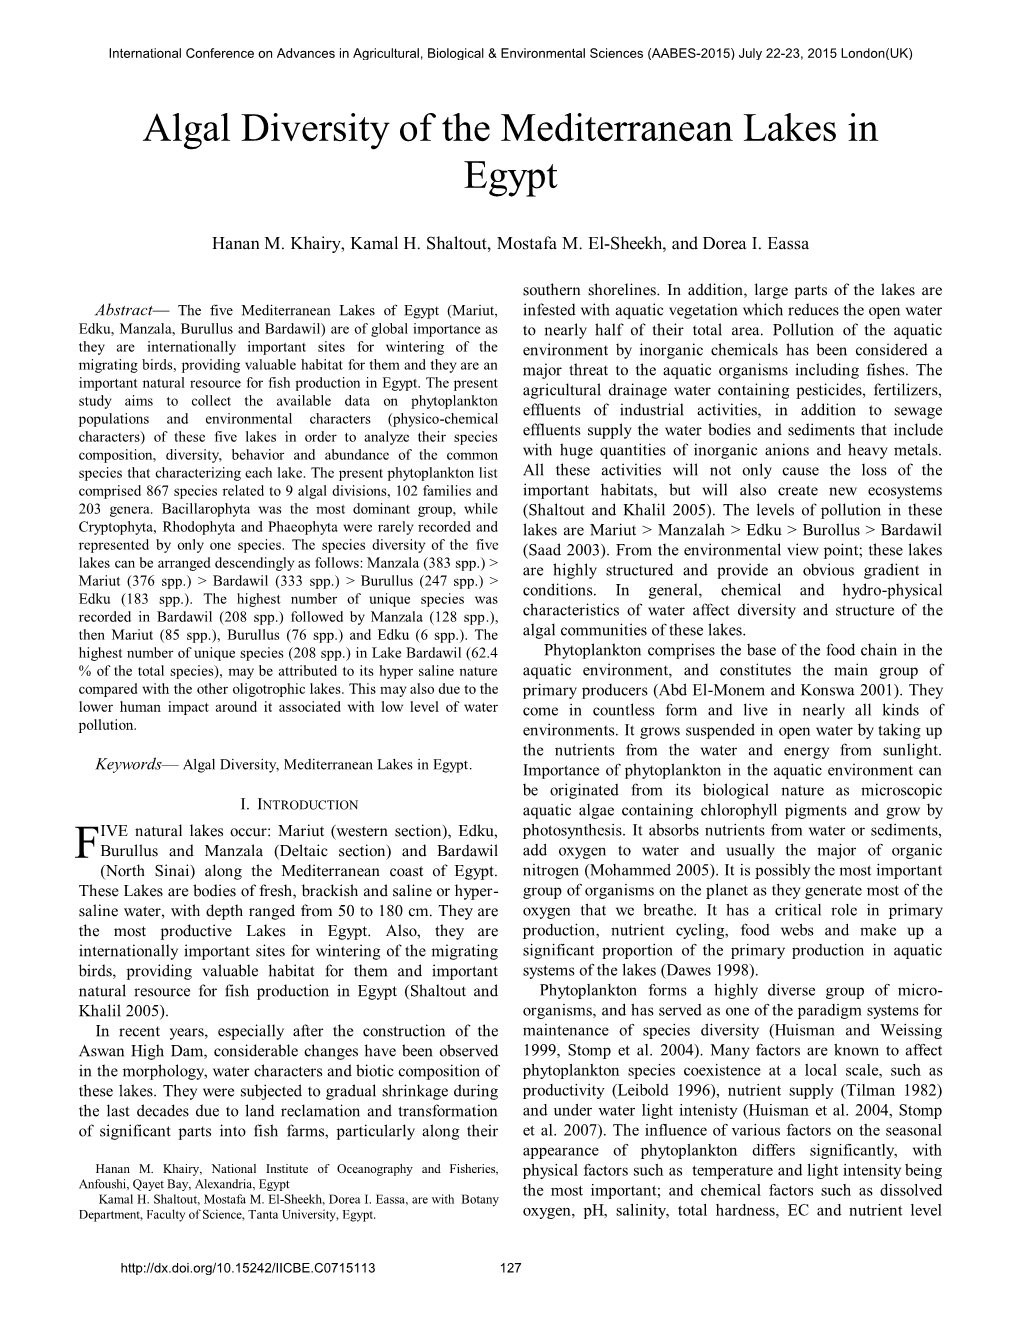 Algal Diversity of the Mediterranean Lakes in Egypt